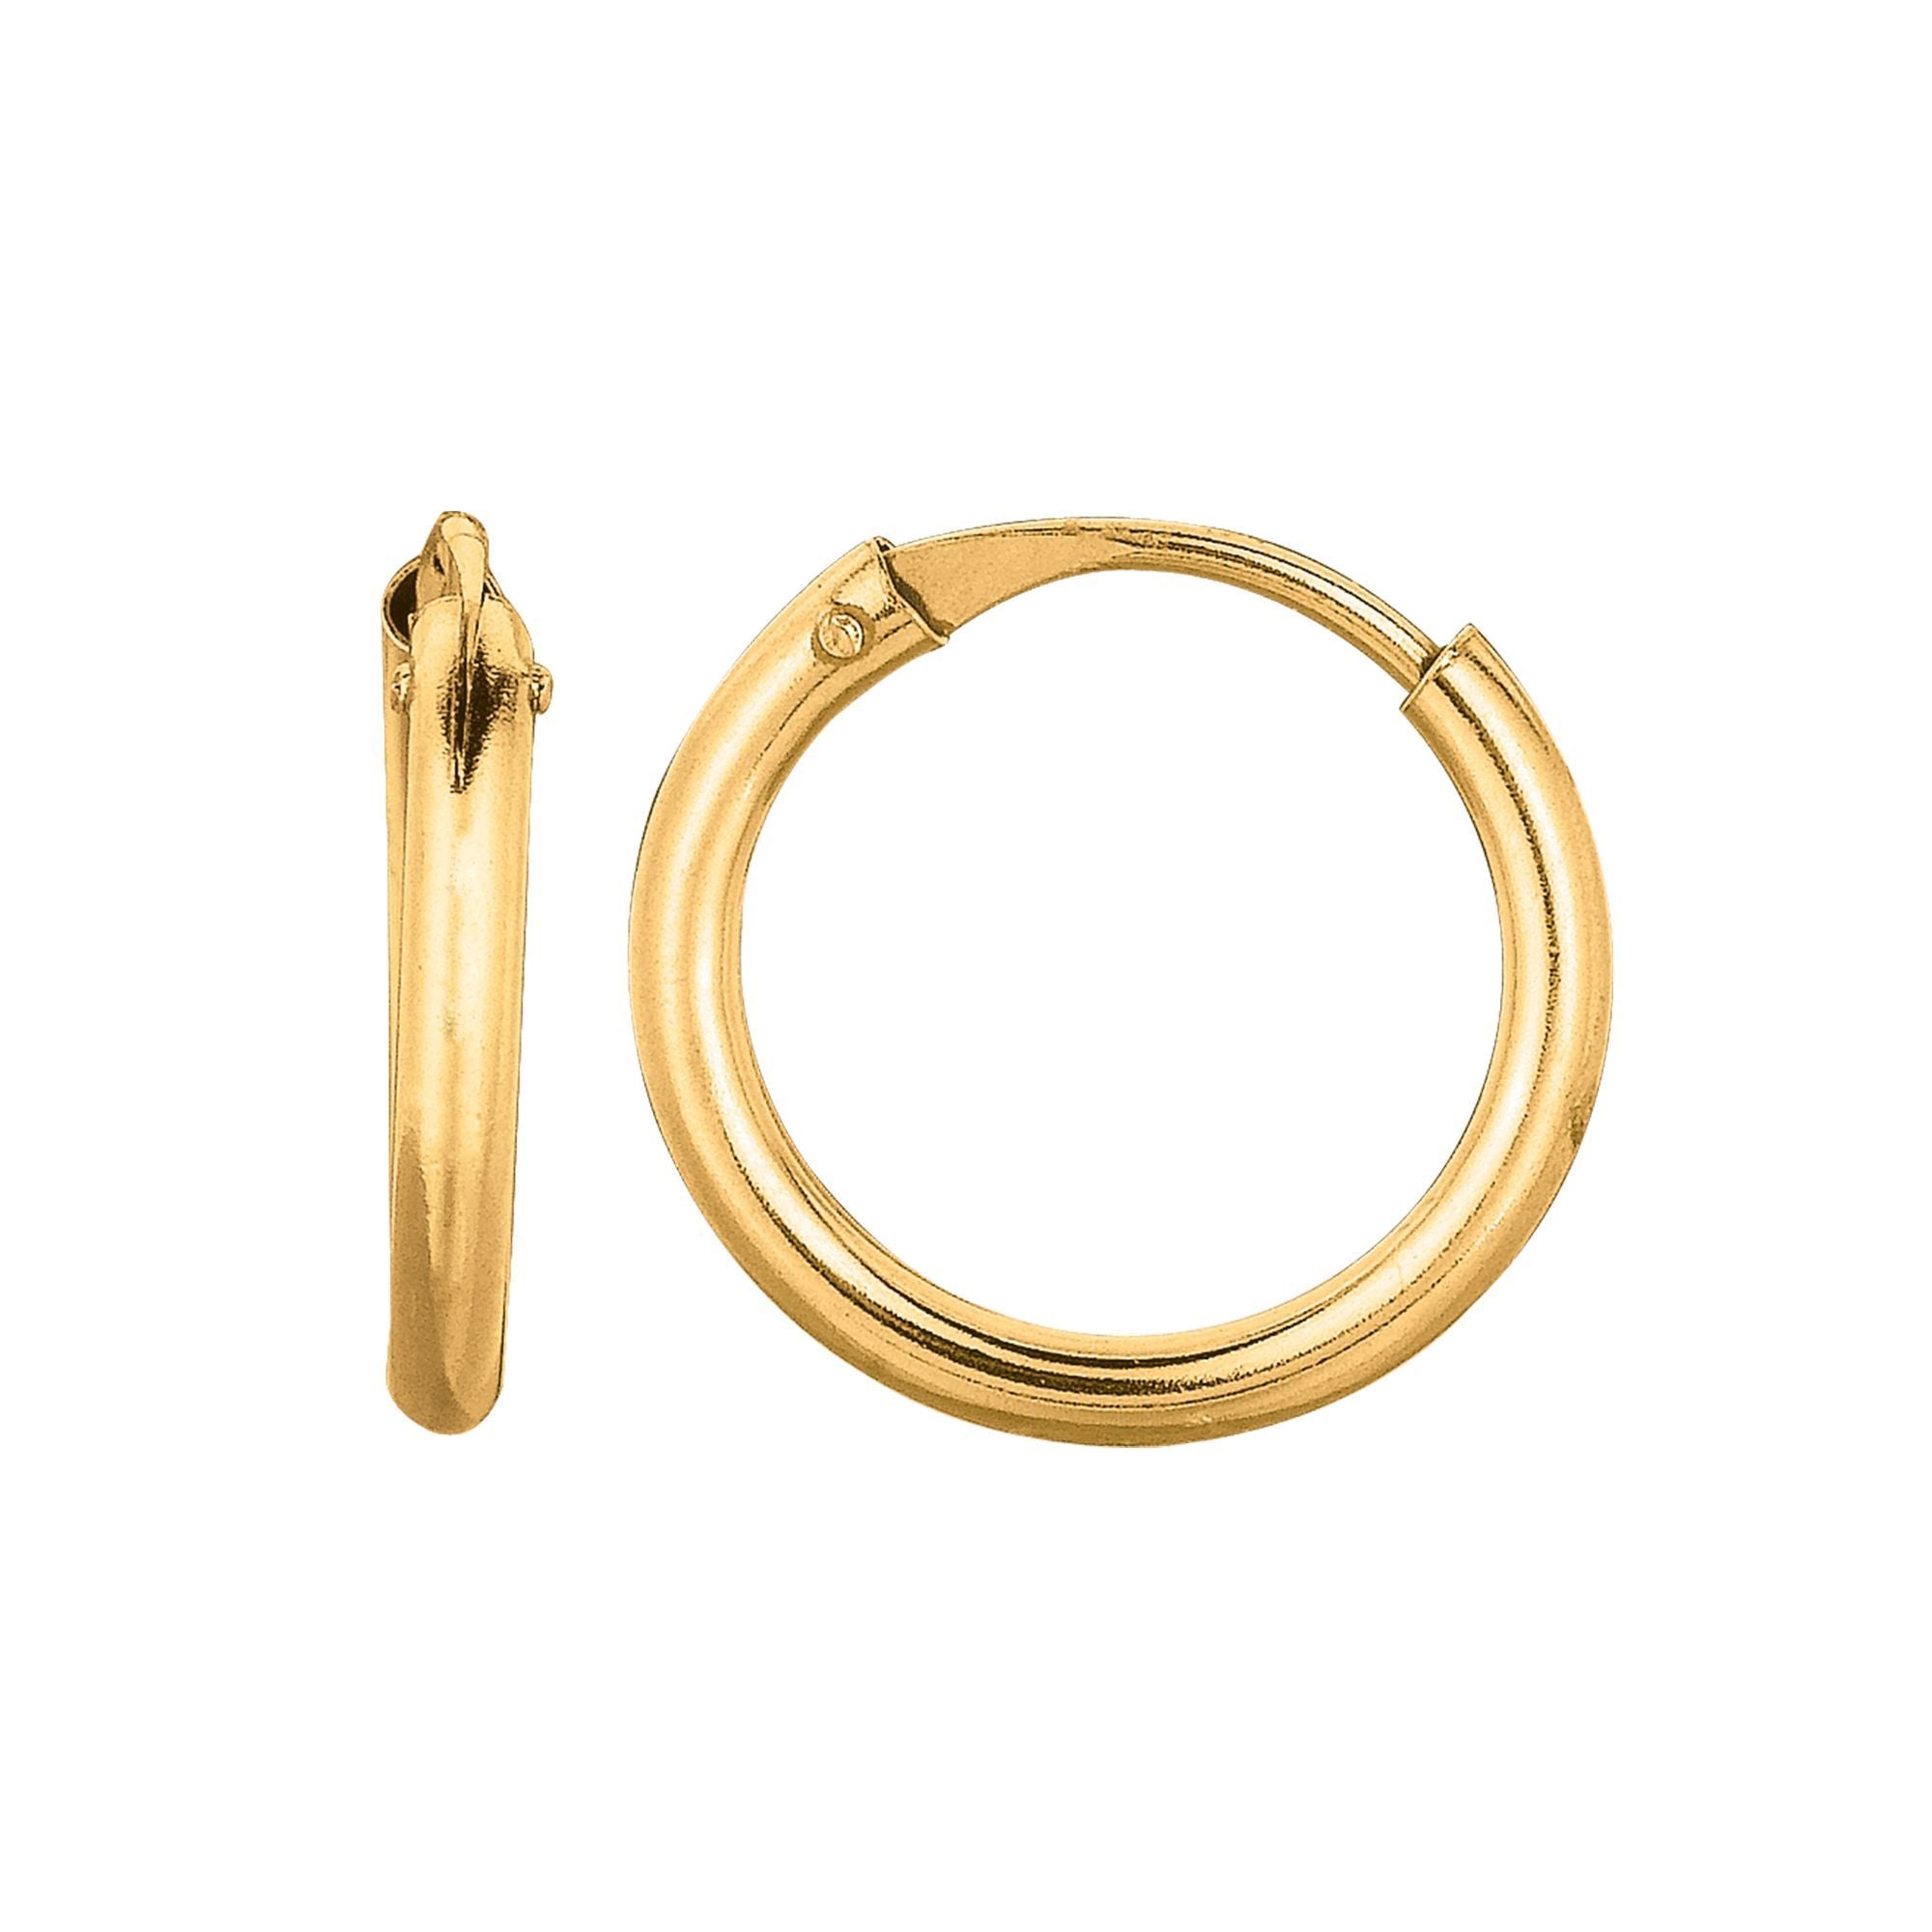 Minimalist Solid Gold Round Endless Hoop Earrings - wingroupjewelry